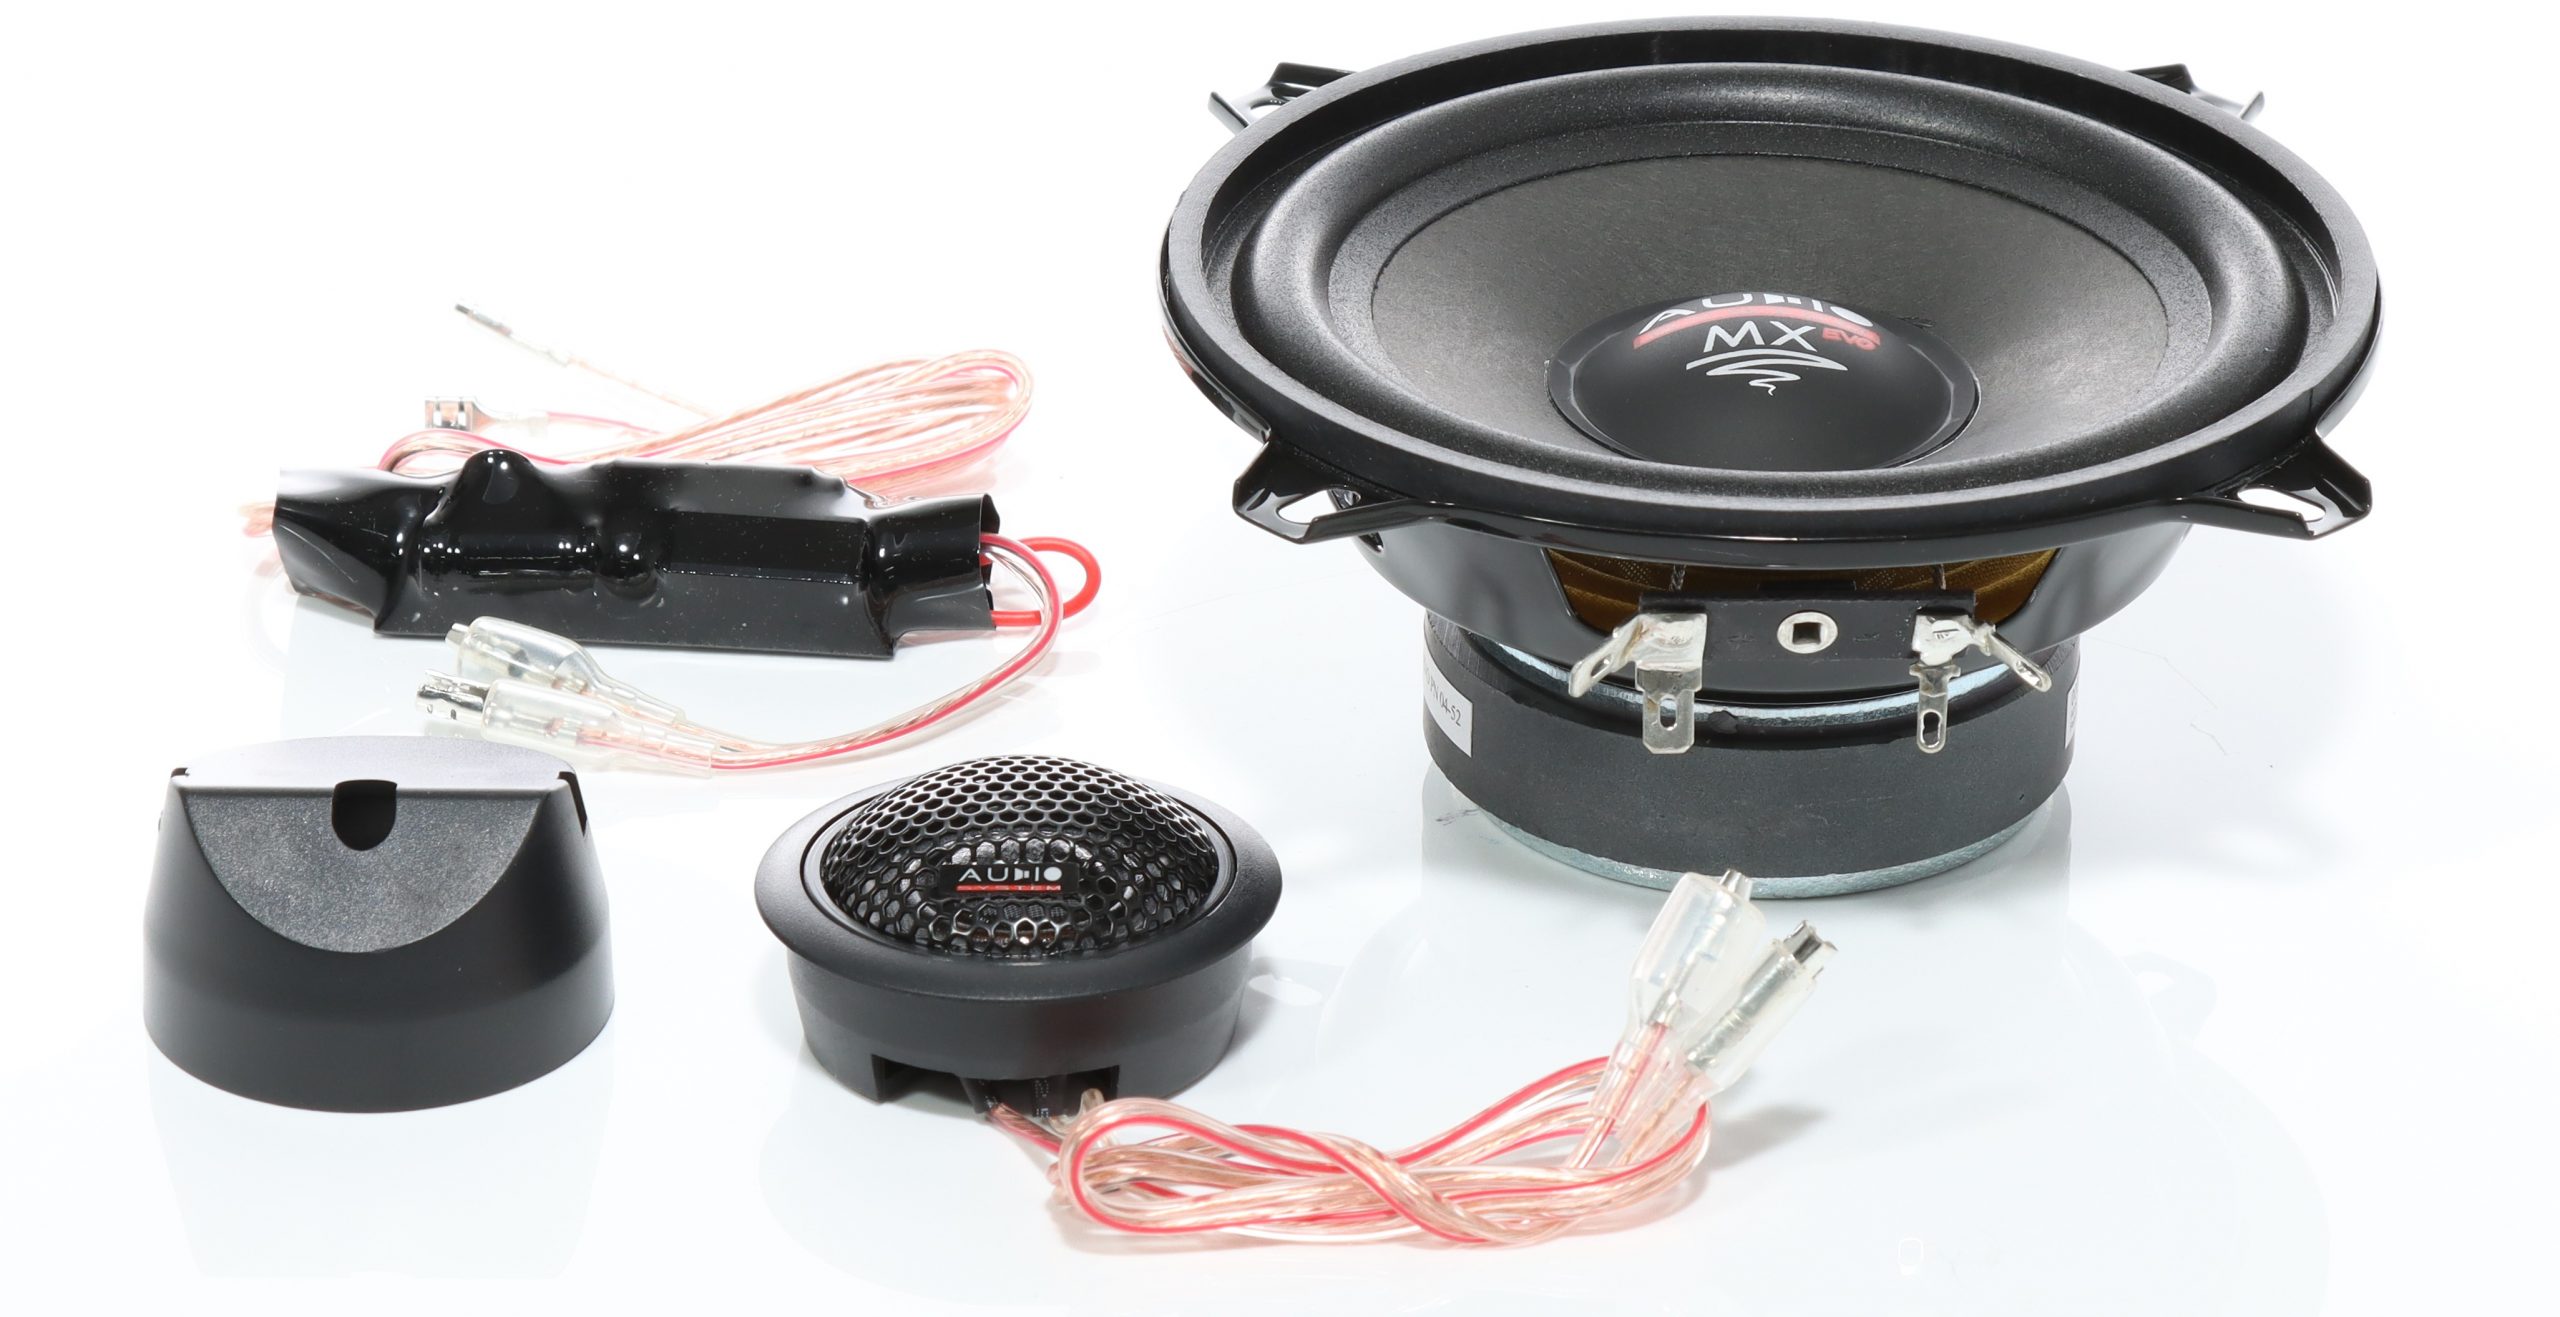 Audio System MX 130 EVO 13 cm (5.25") 2-Wege Komponenten Lautsprecher Set 